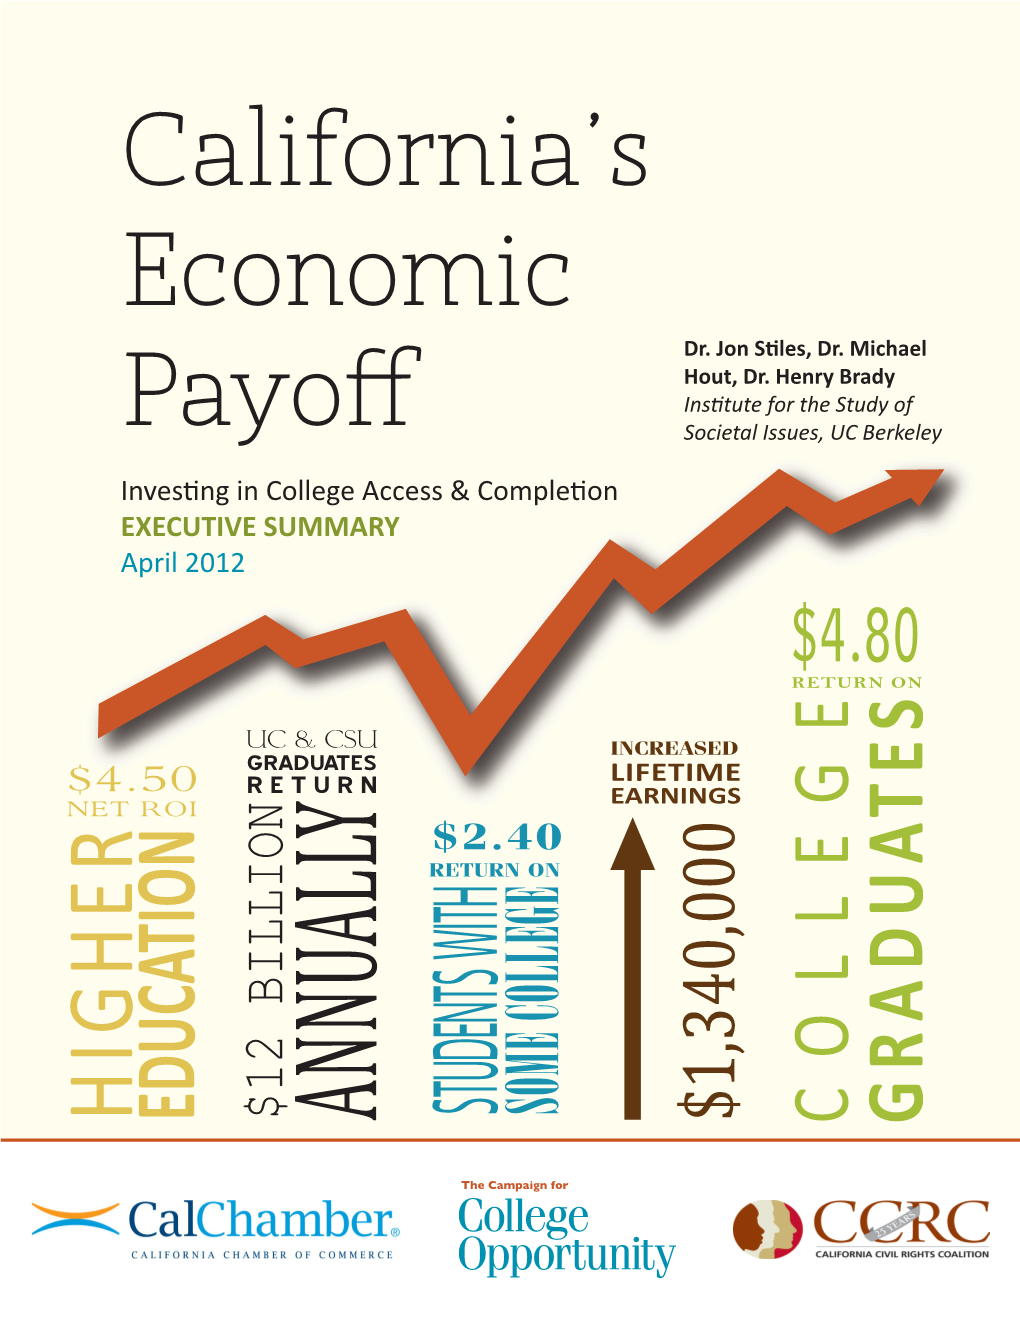 California's Economic Payoff